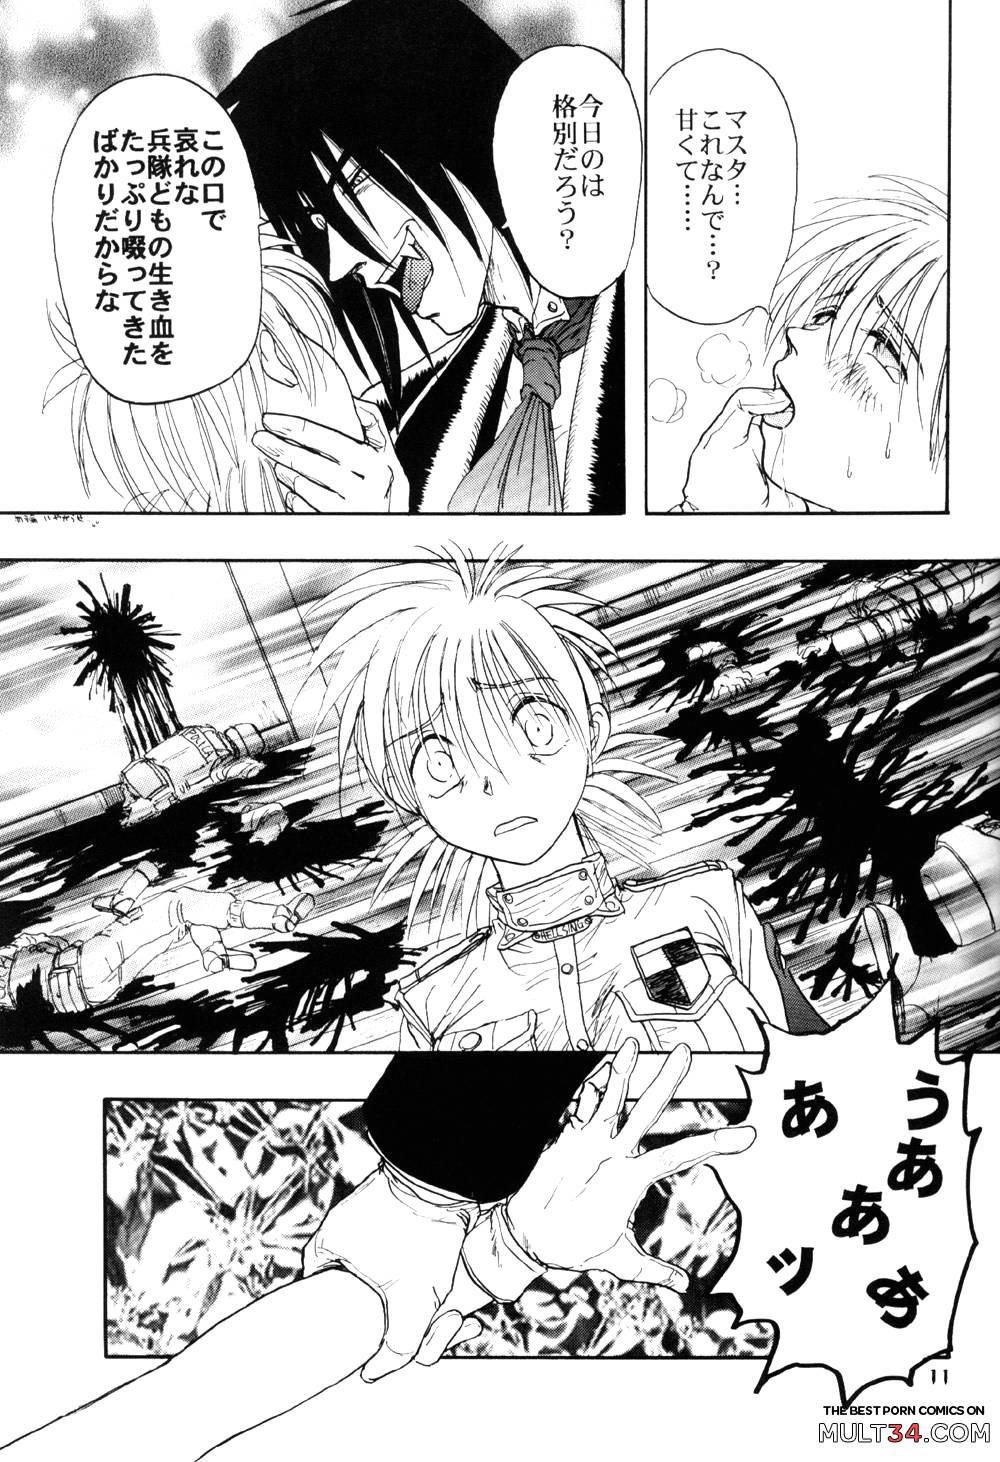 Hitsugi o Tataku Onna page 11